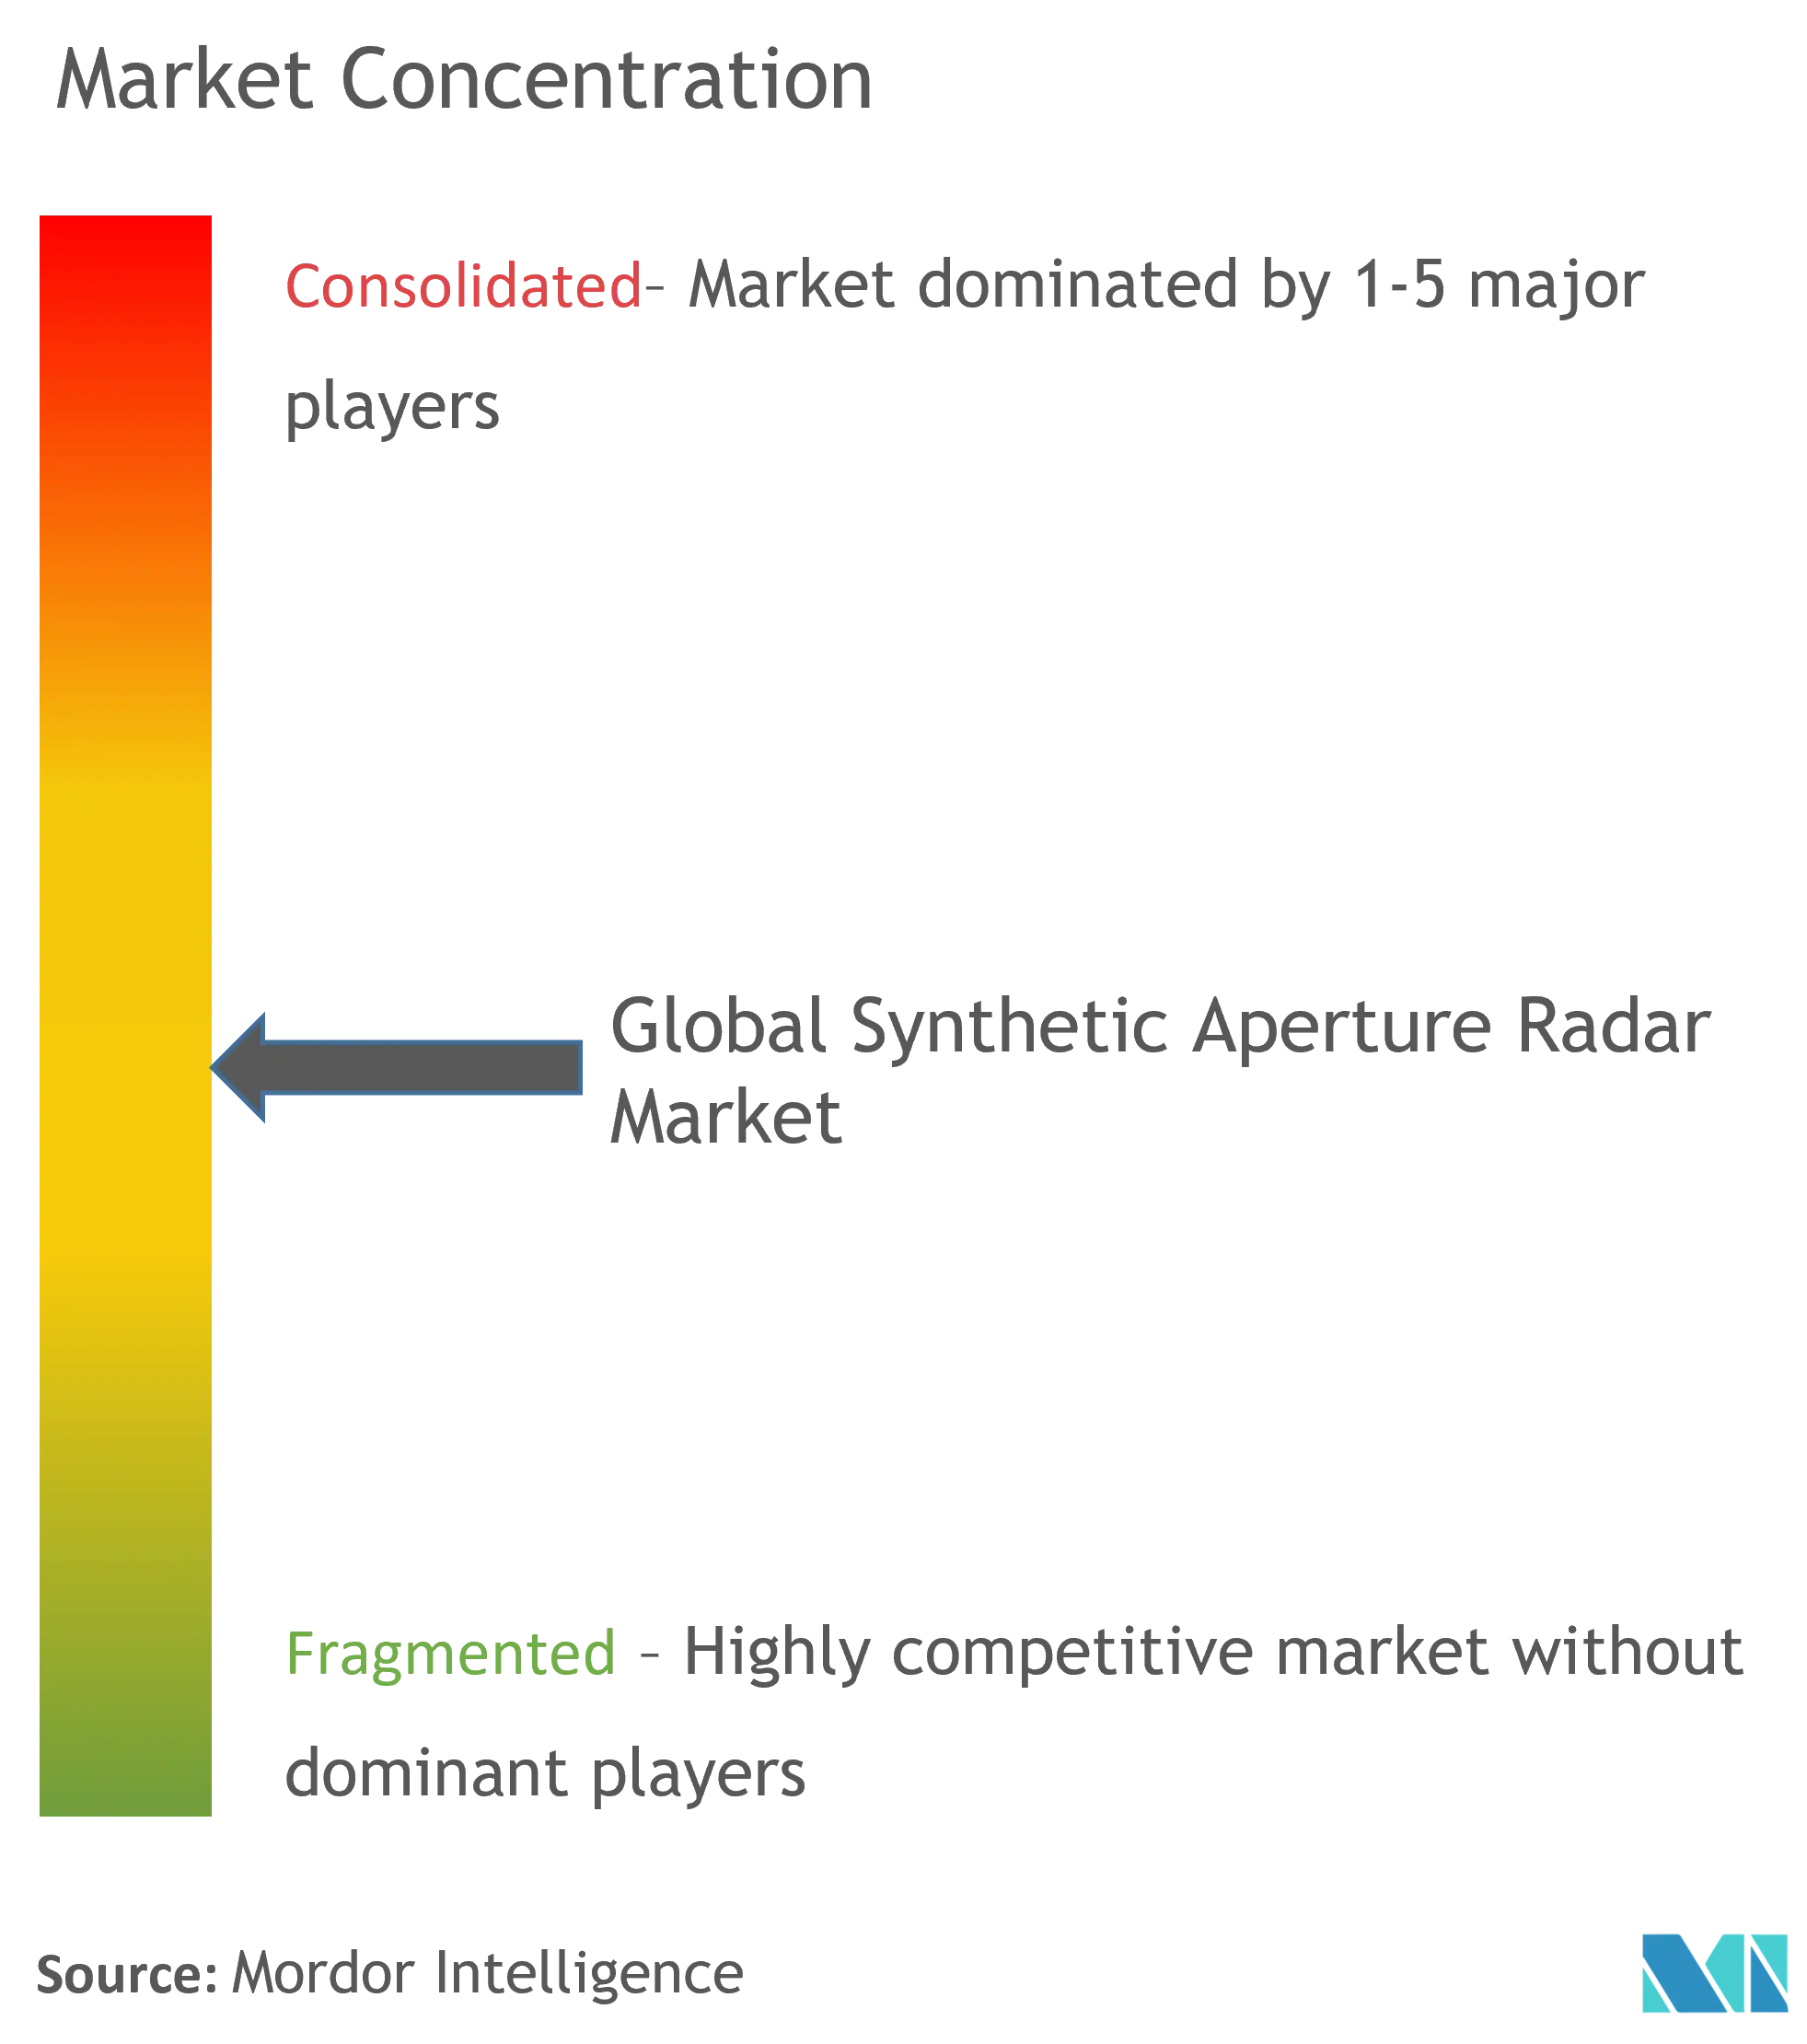 Synthetic Aperture Radar Market Concentration